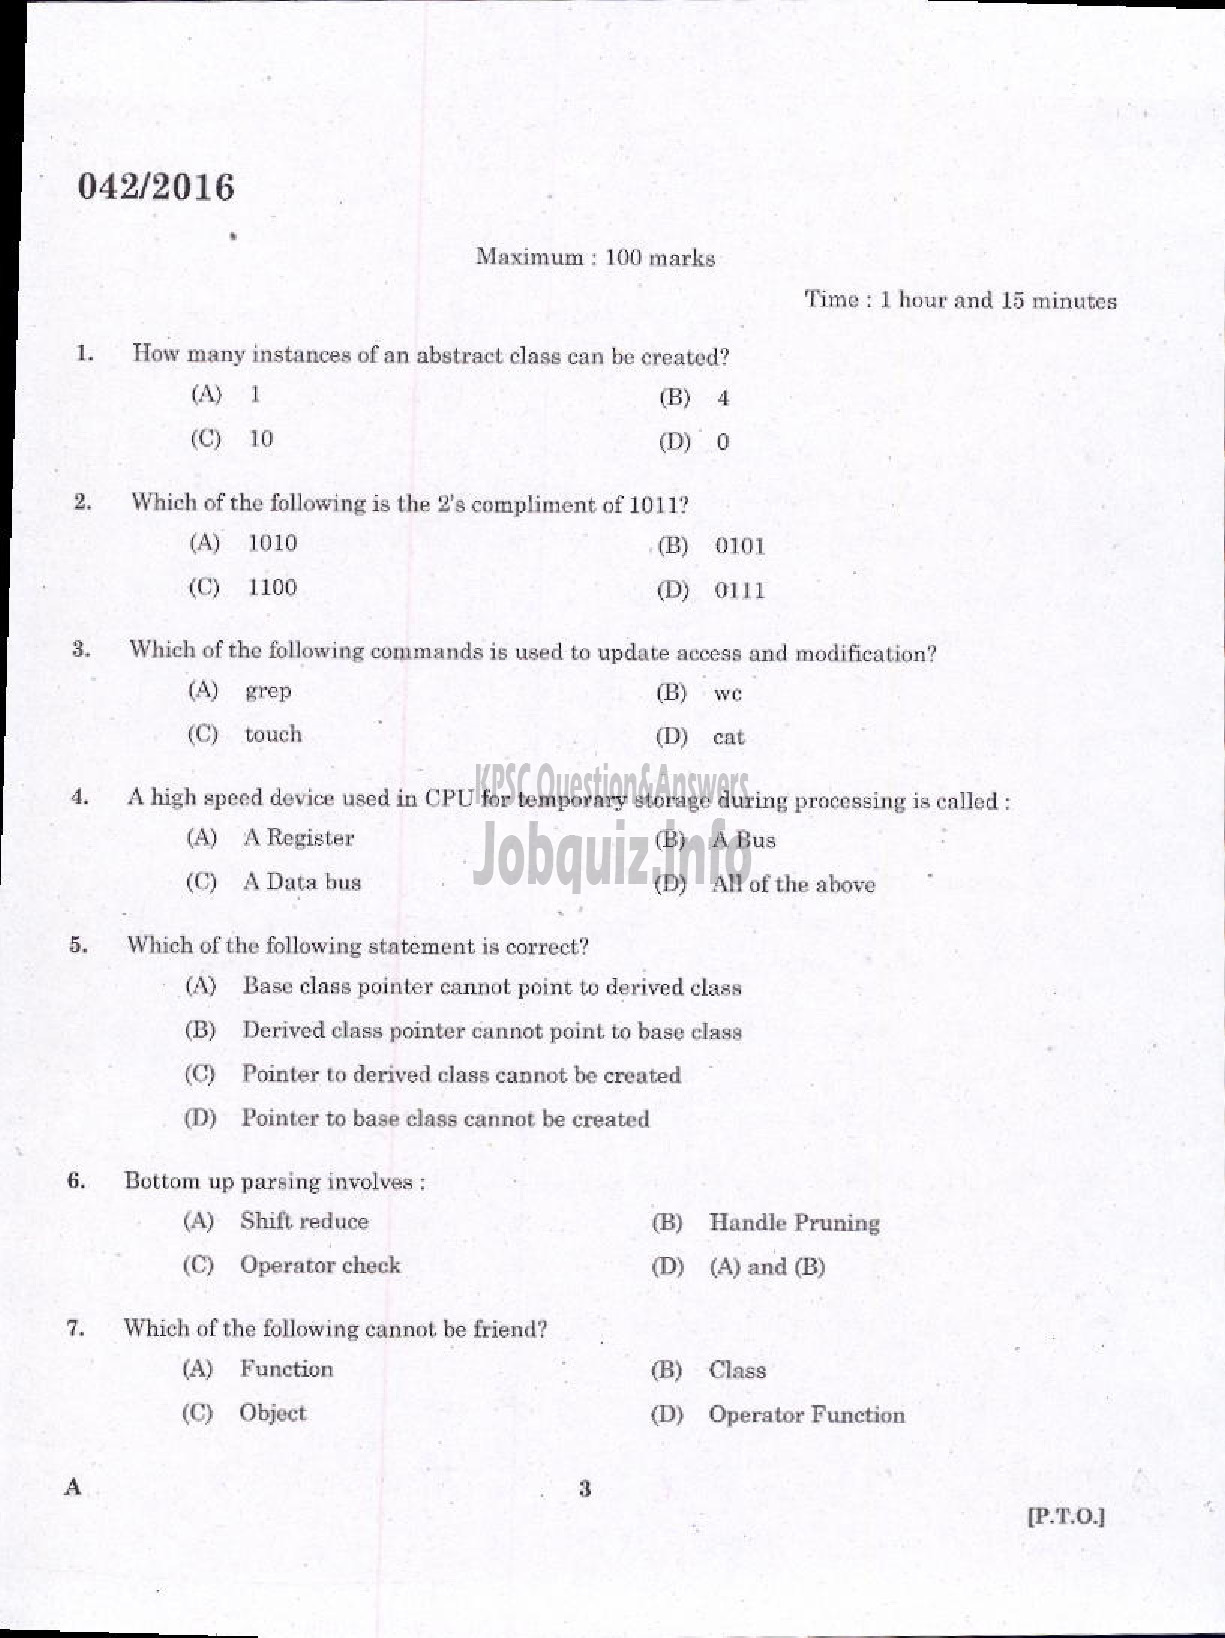 Kerala PSC Question Paper - TRADESMAN COMPUTER TECHNICAL EDUCATION-1